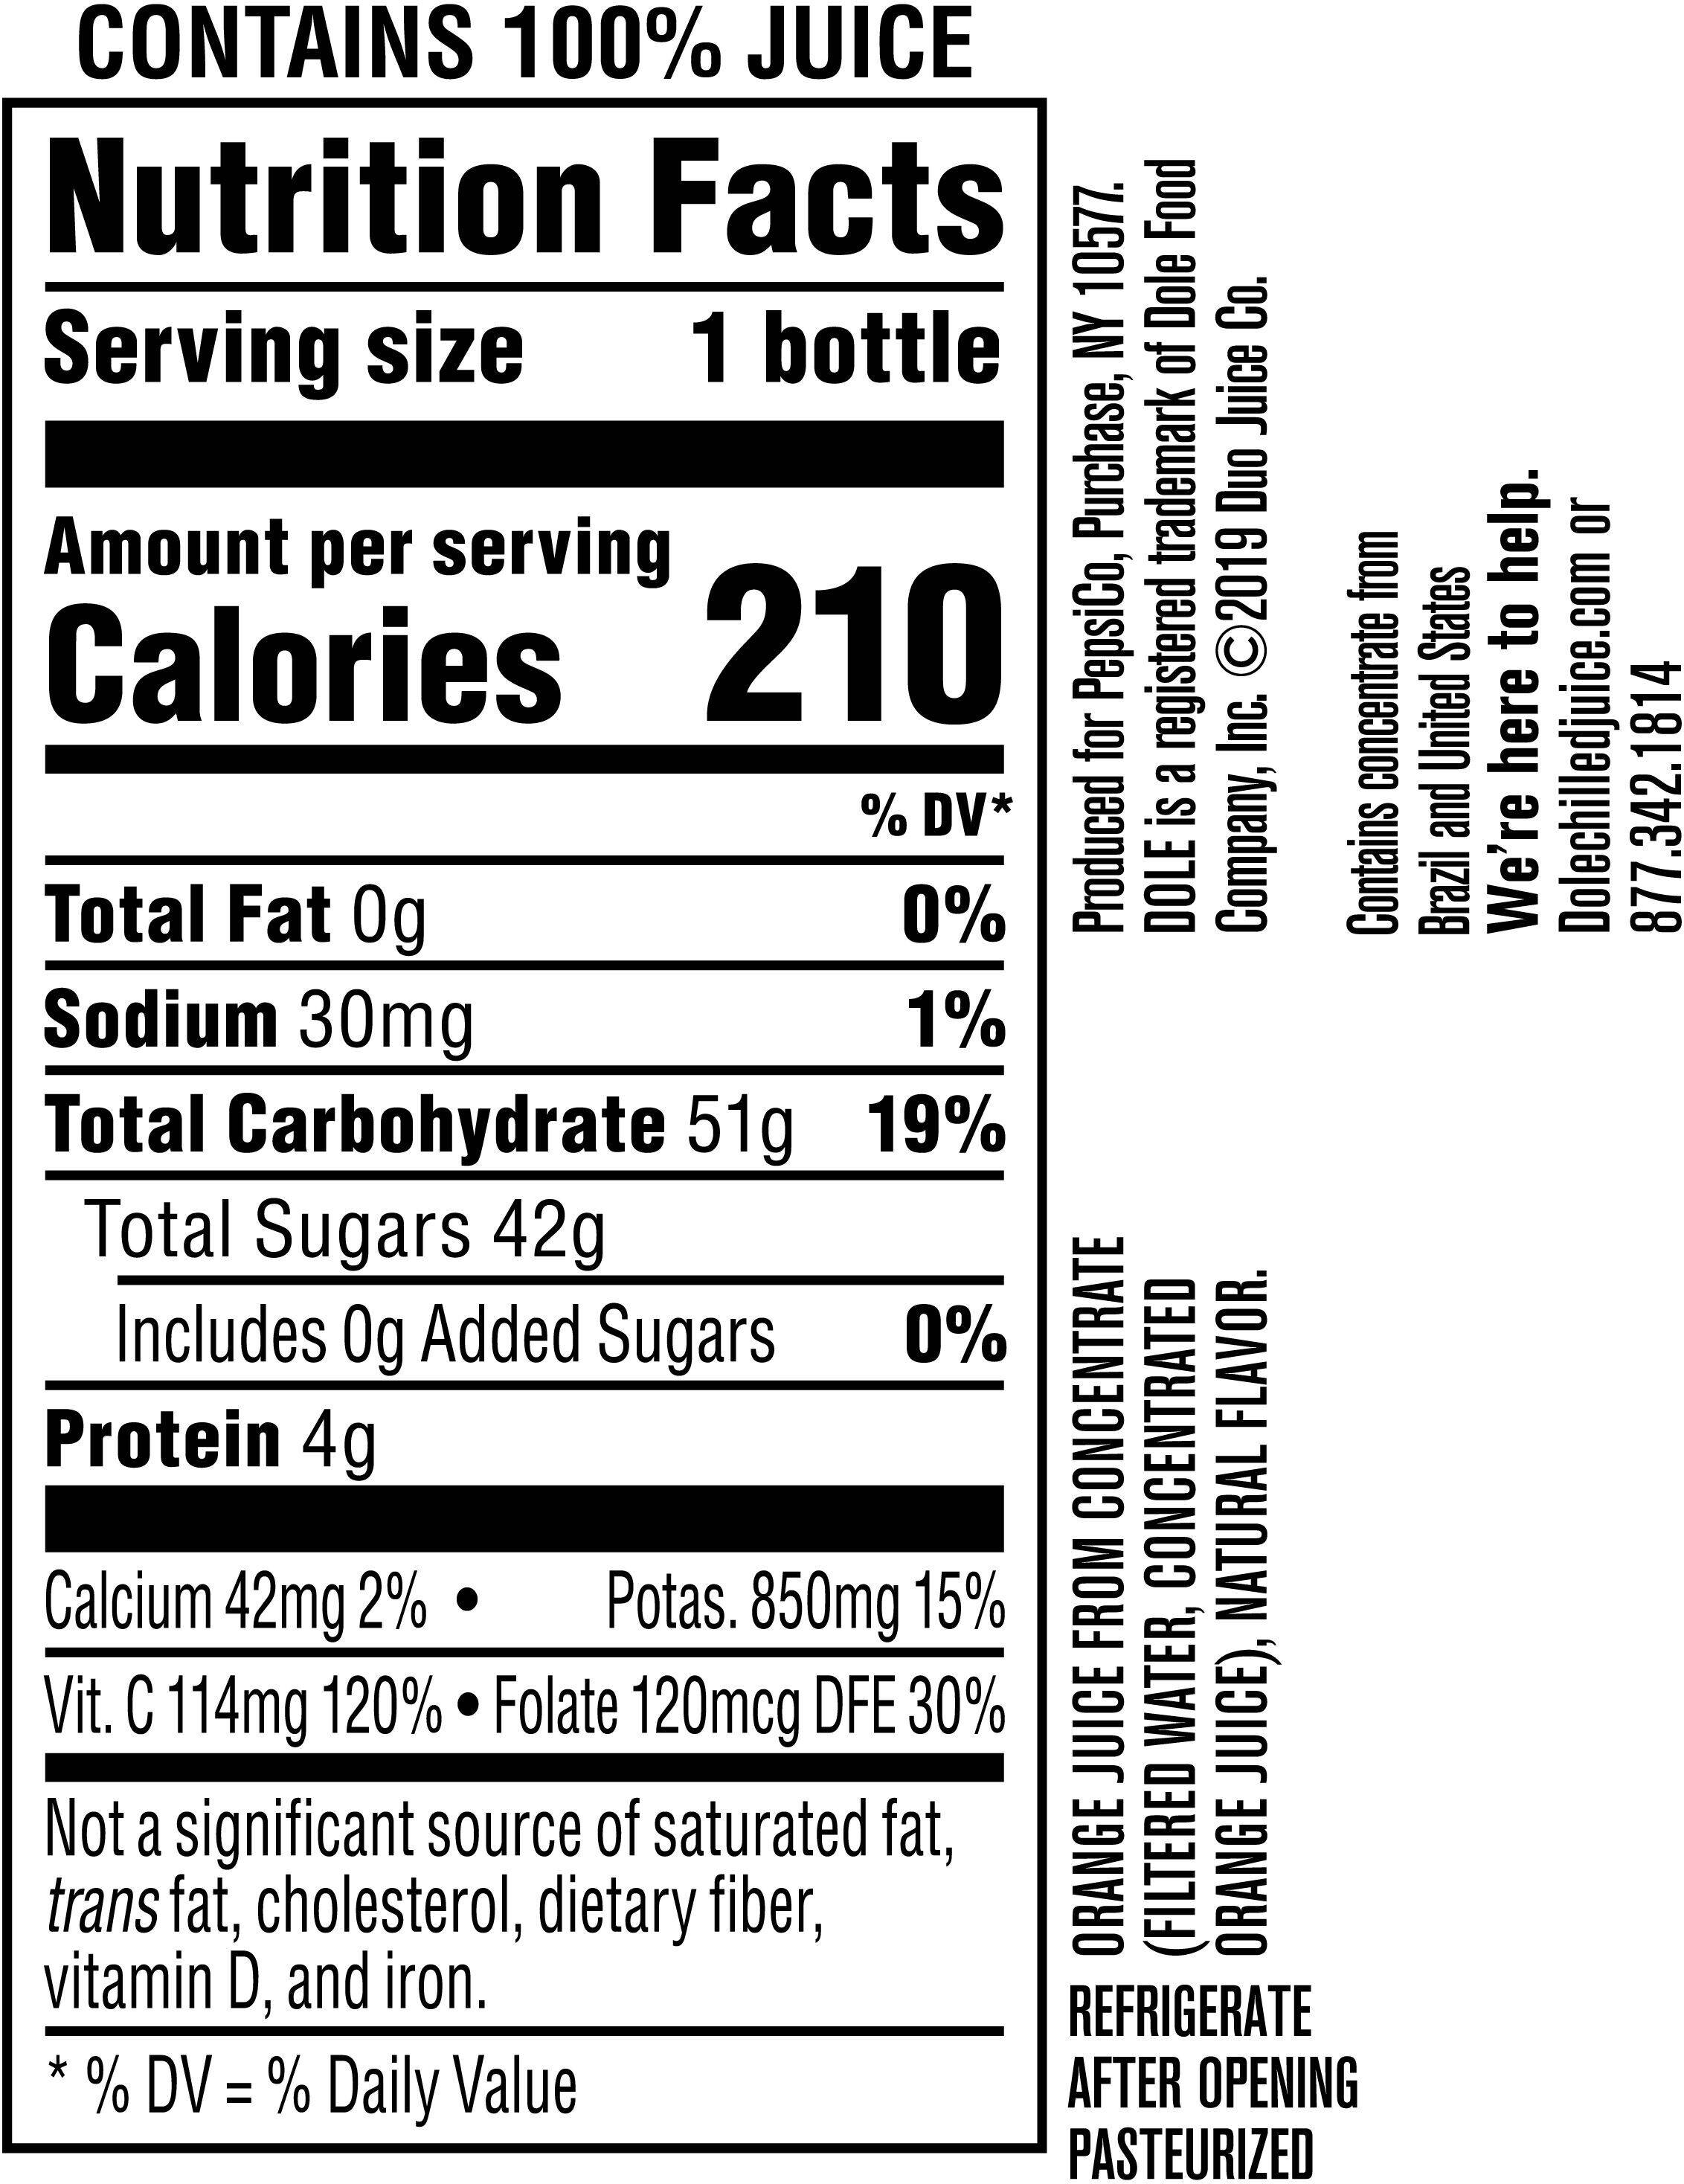 Image describing nutrition information for product Dole Orange Juice